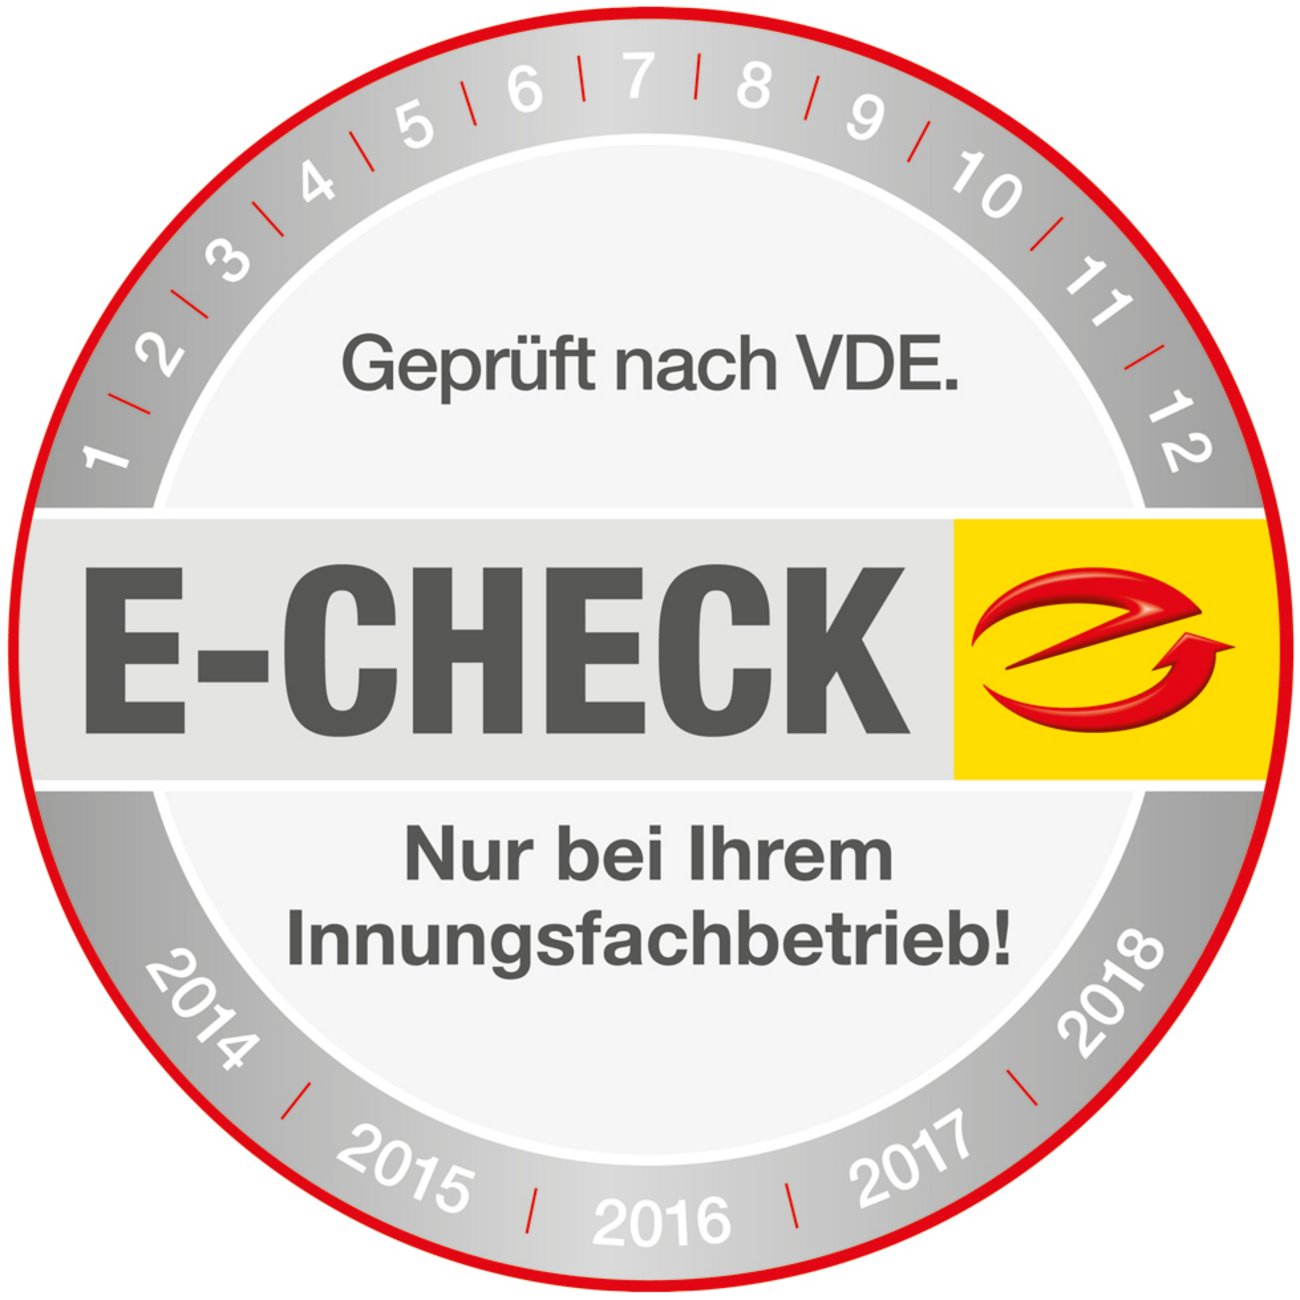 Der E-Check bei Pfeiffer GmbH in Berg